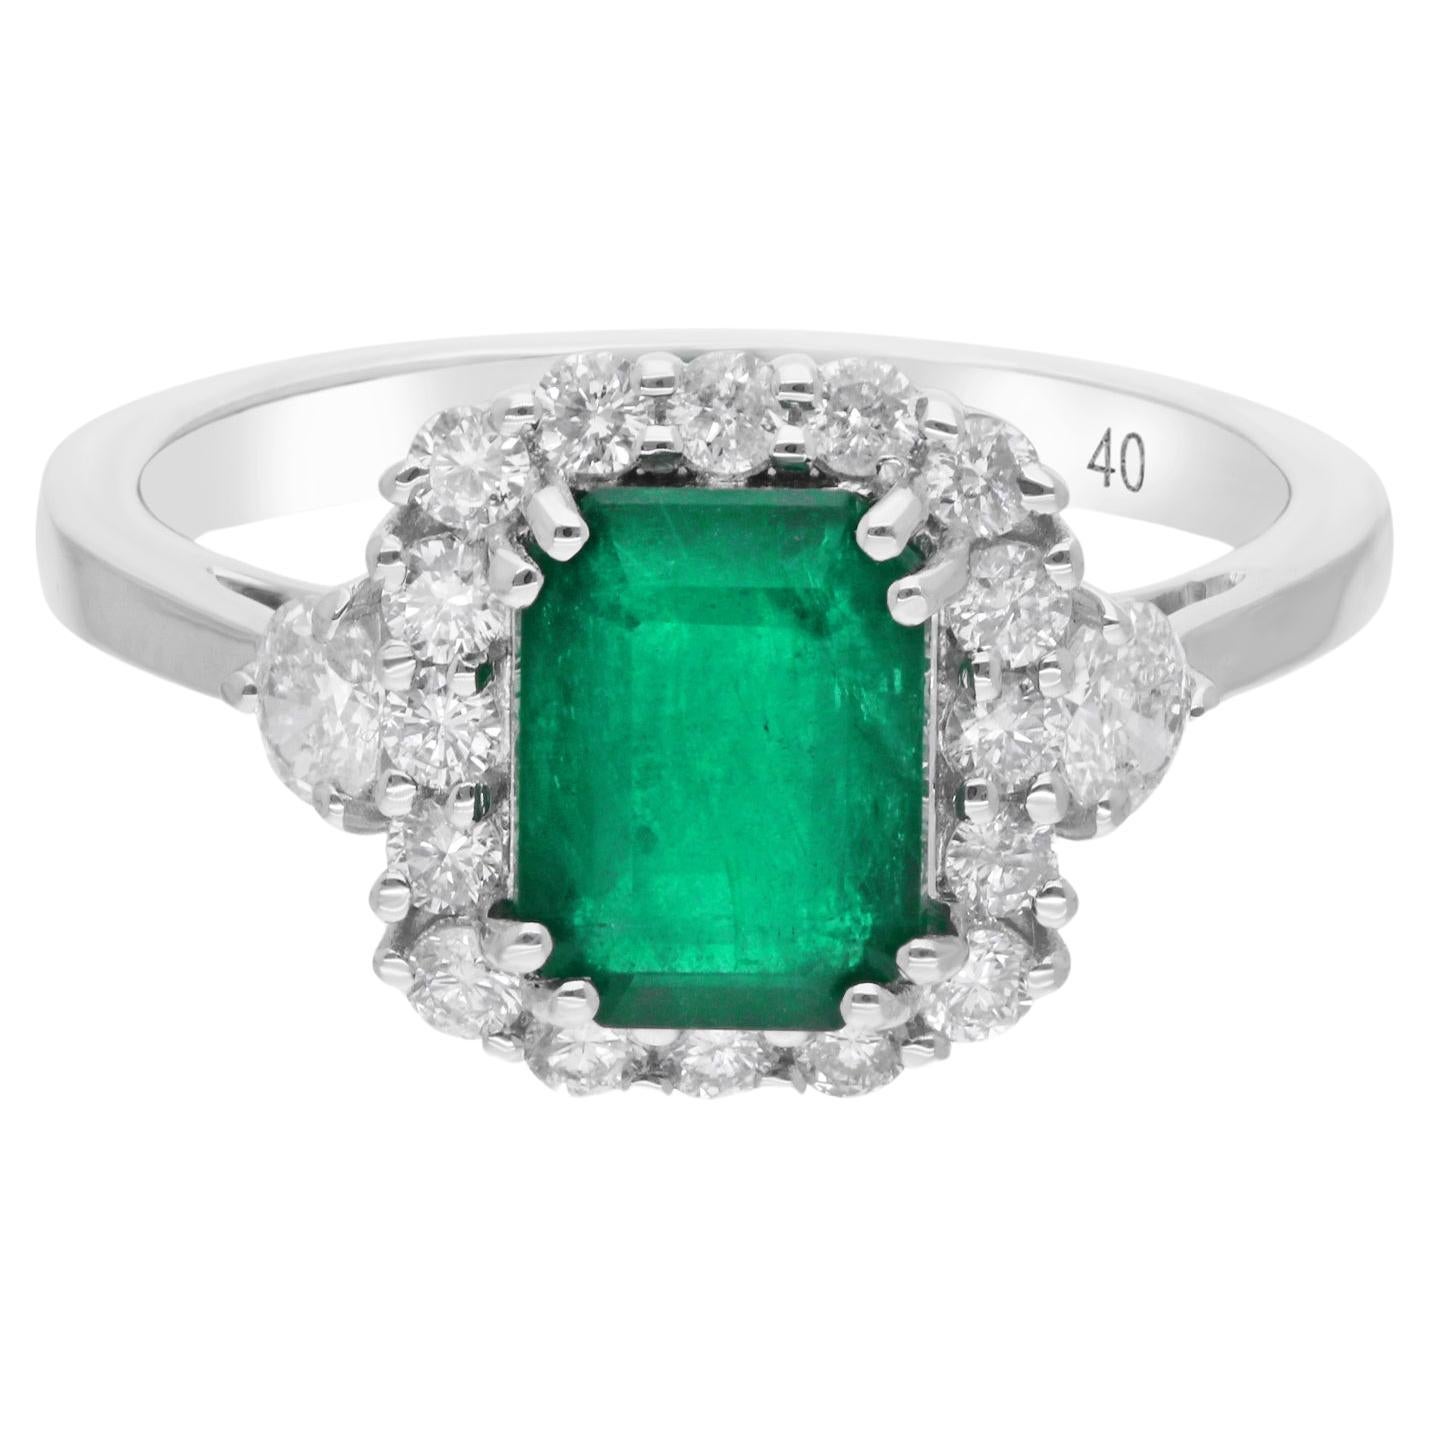 Real Zambian Emerald Gemstone Cocktail Ring Diamond 14 Karat White Gold 2.20 TCW For Sale